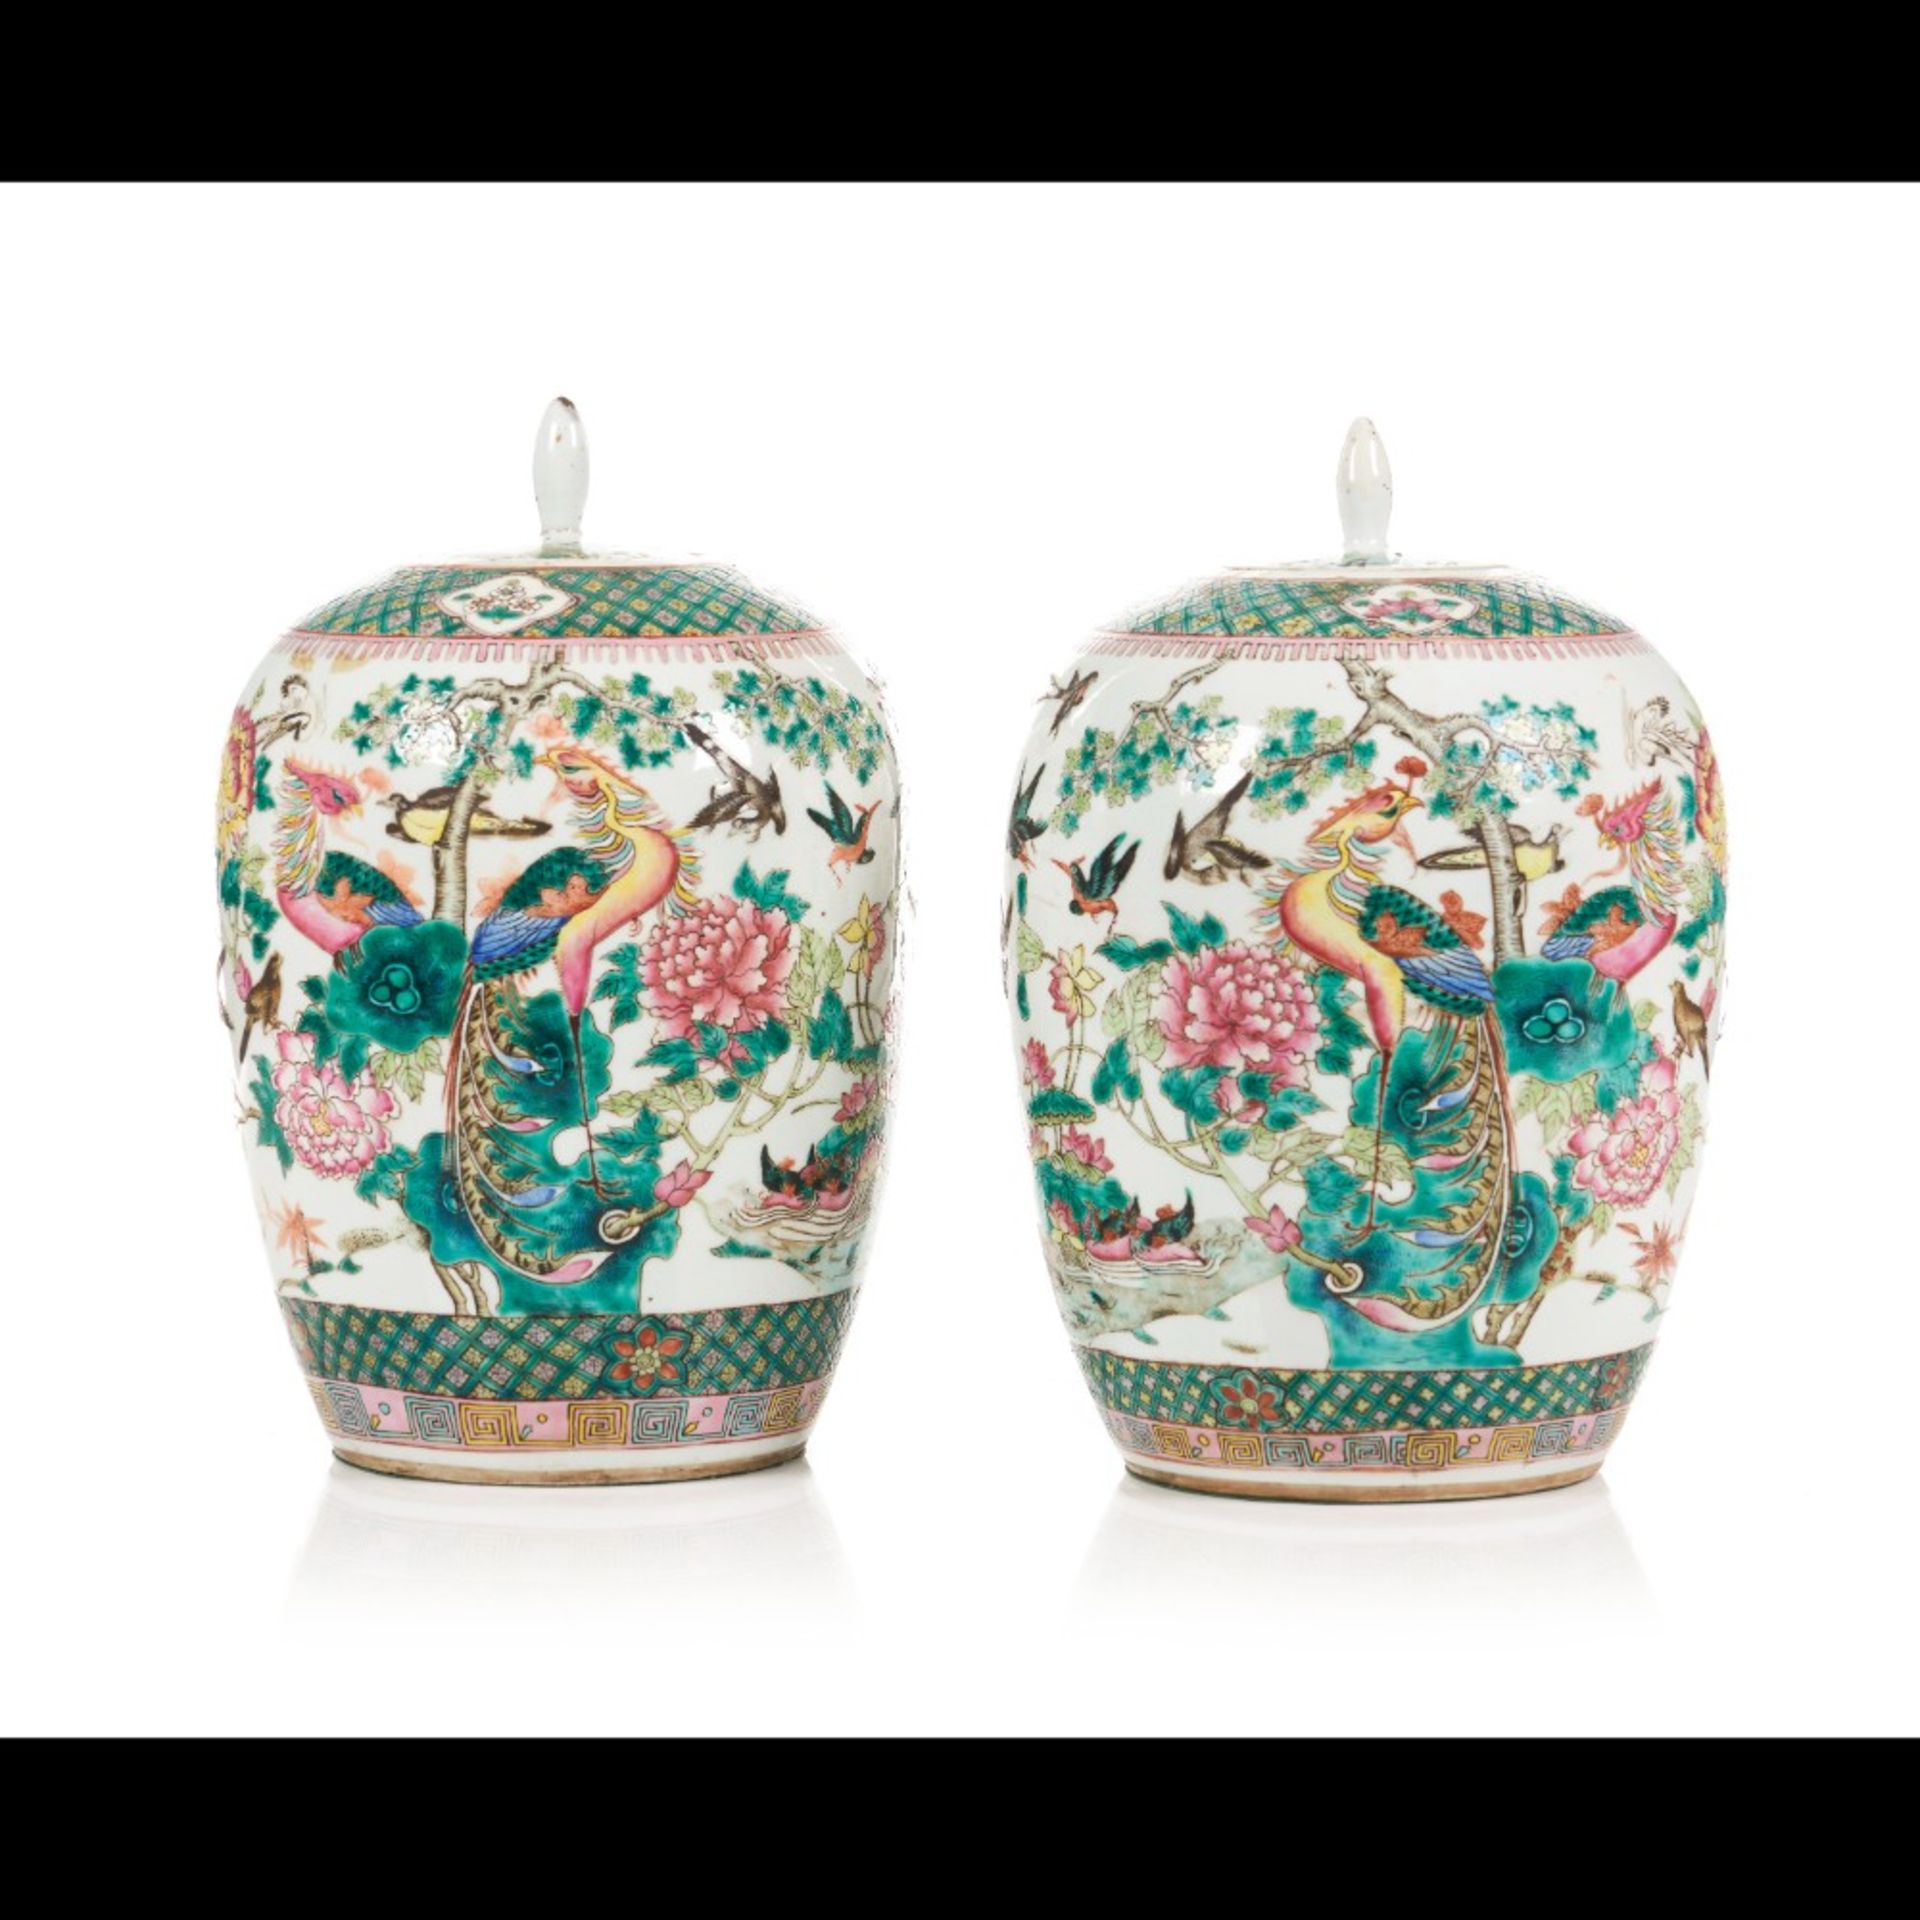  A pair of lidded ginger vases